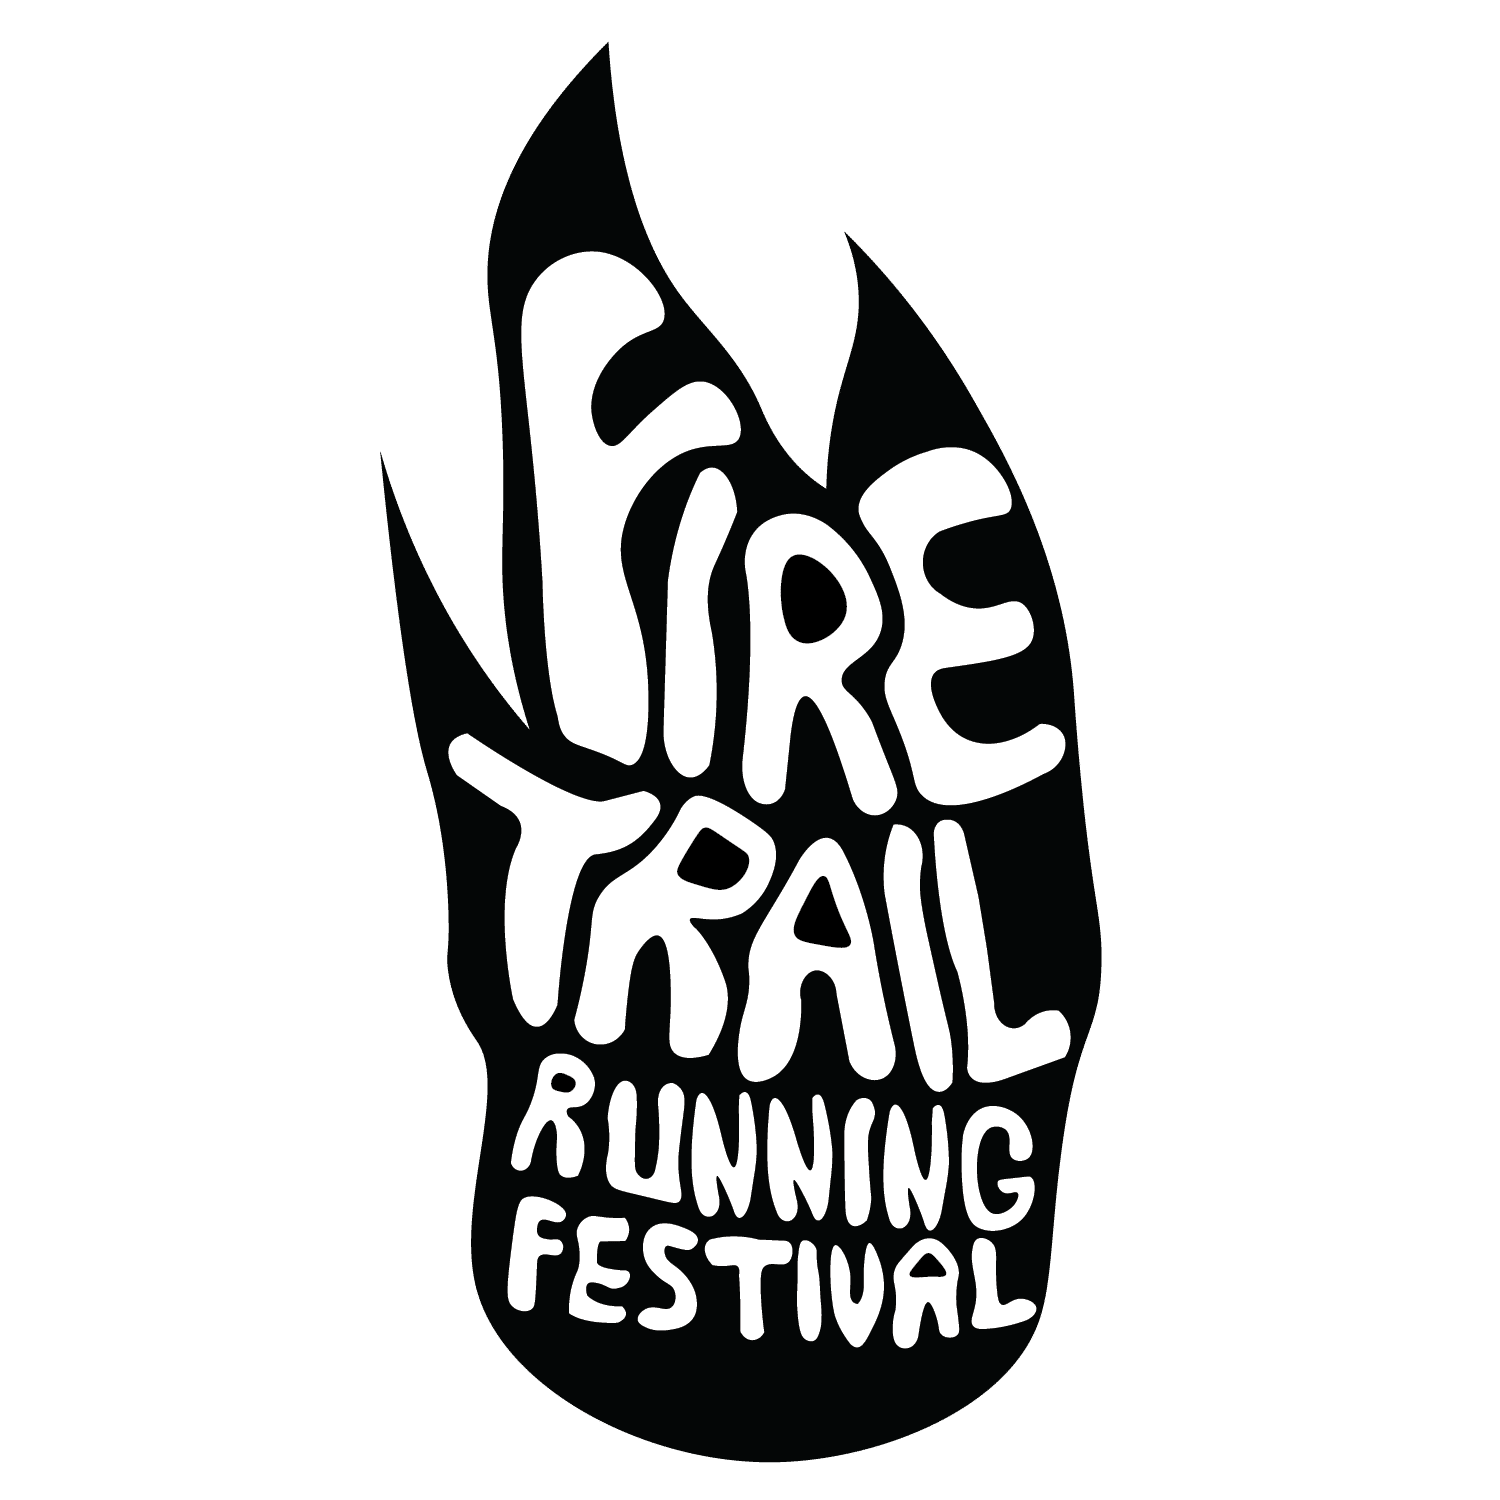 fire-trail-running-festival-logo_sC5ma0A-2